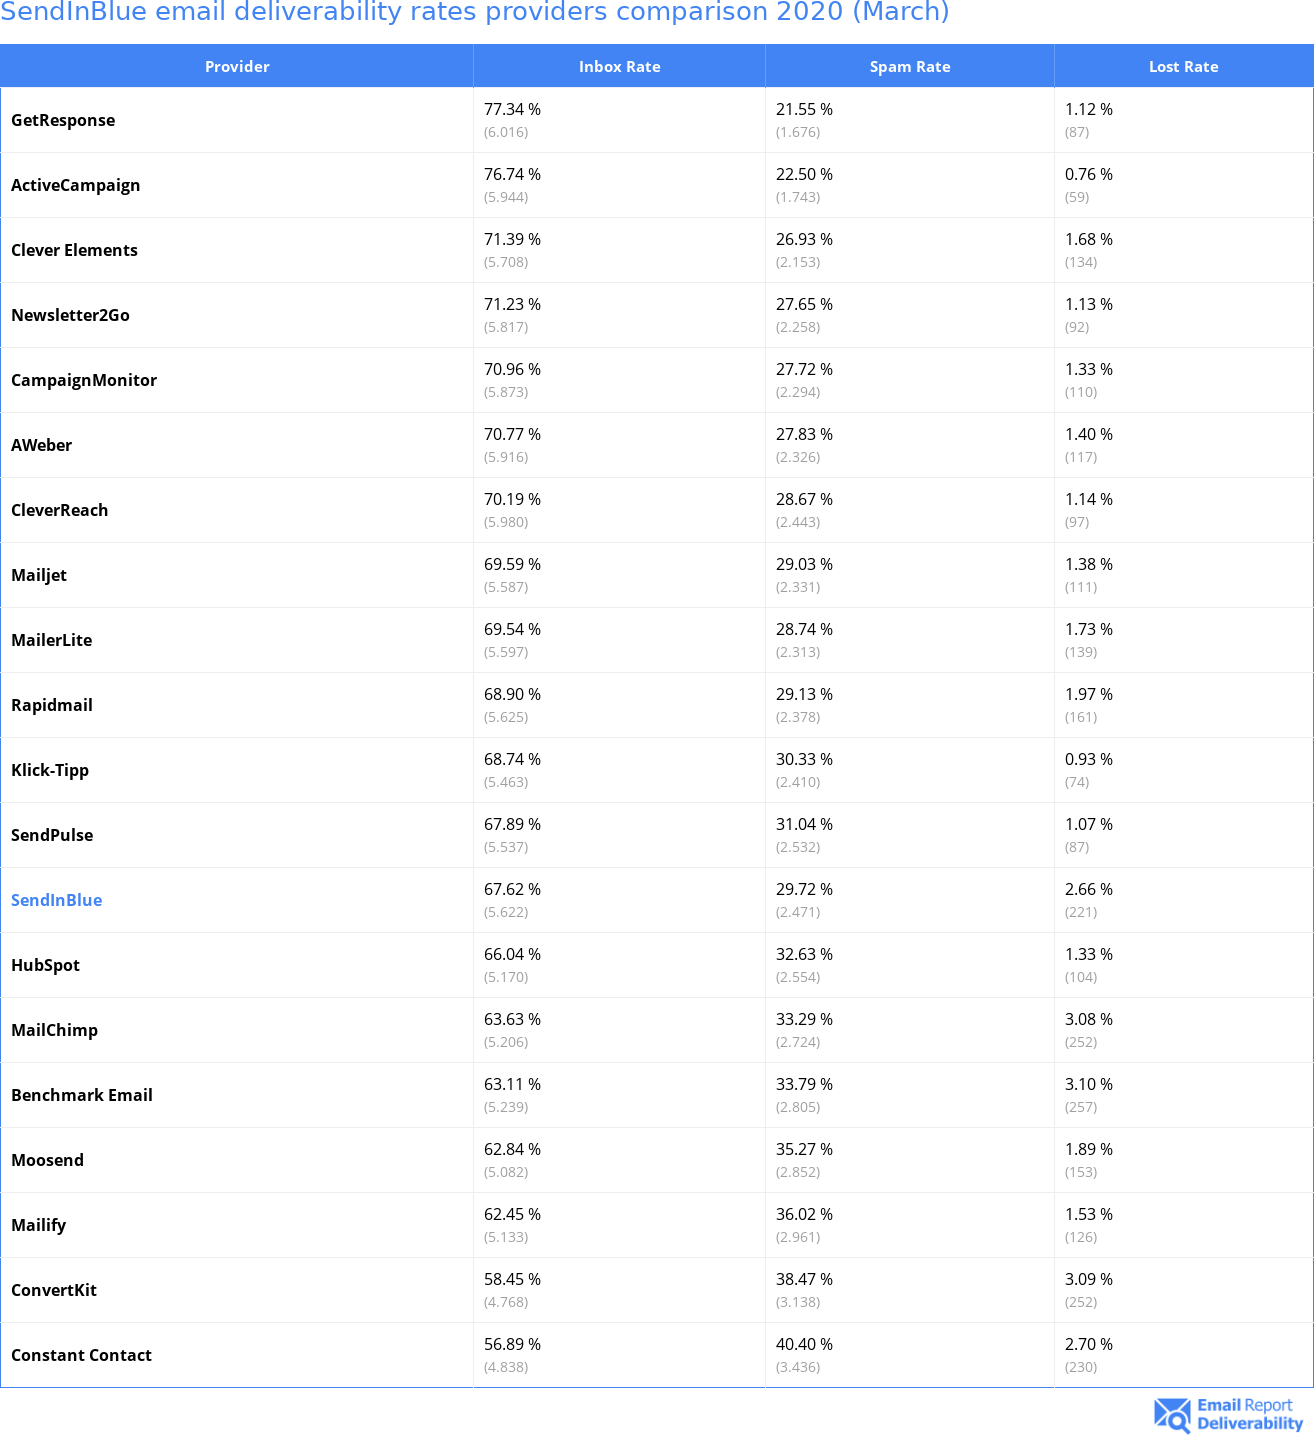 SendInBlue email deliverability rates providers comparison 2020 (March)